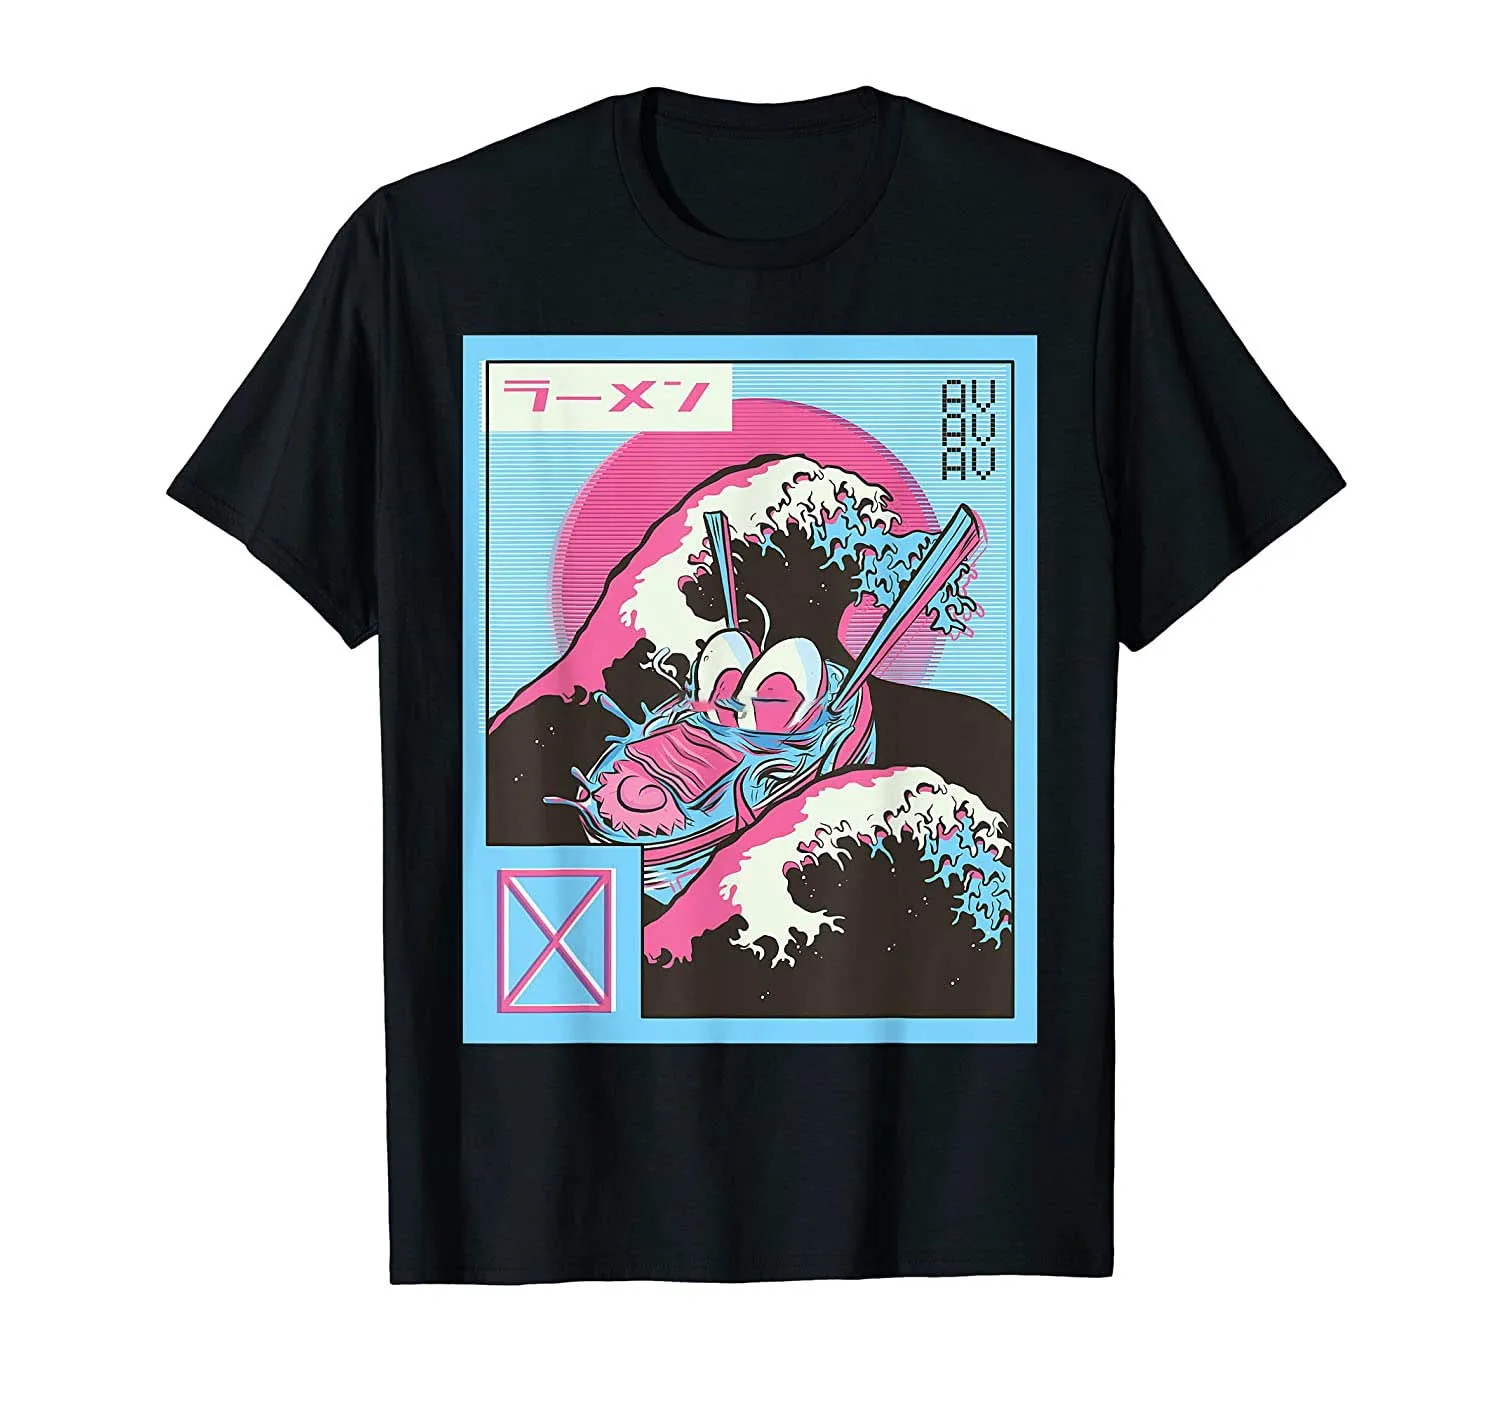 Retro Ramen Vaporwave 90s Japanese Aesthetic Synthwave Gift T-Shirt Men Cotton Tshirt Tees Tops Harajuku Streetwear